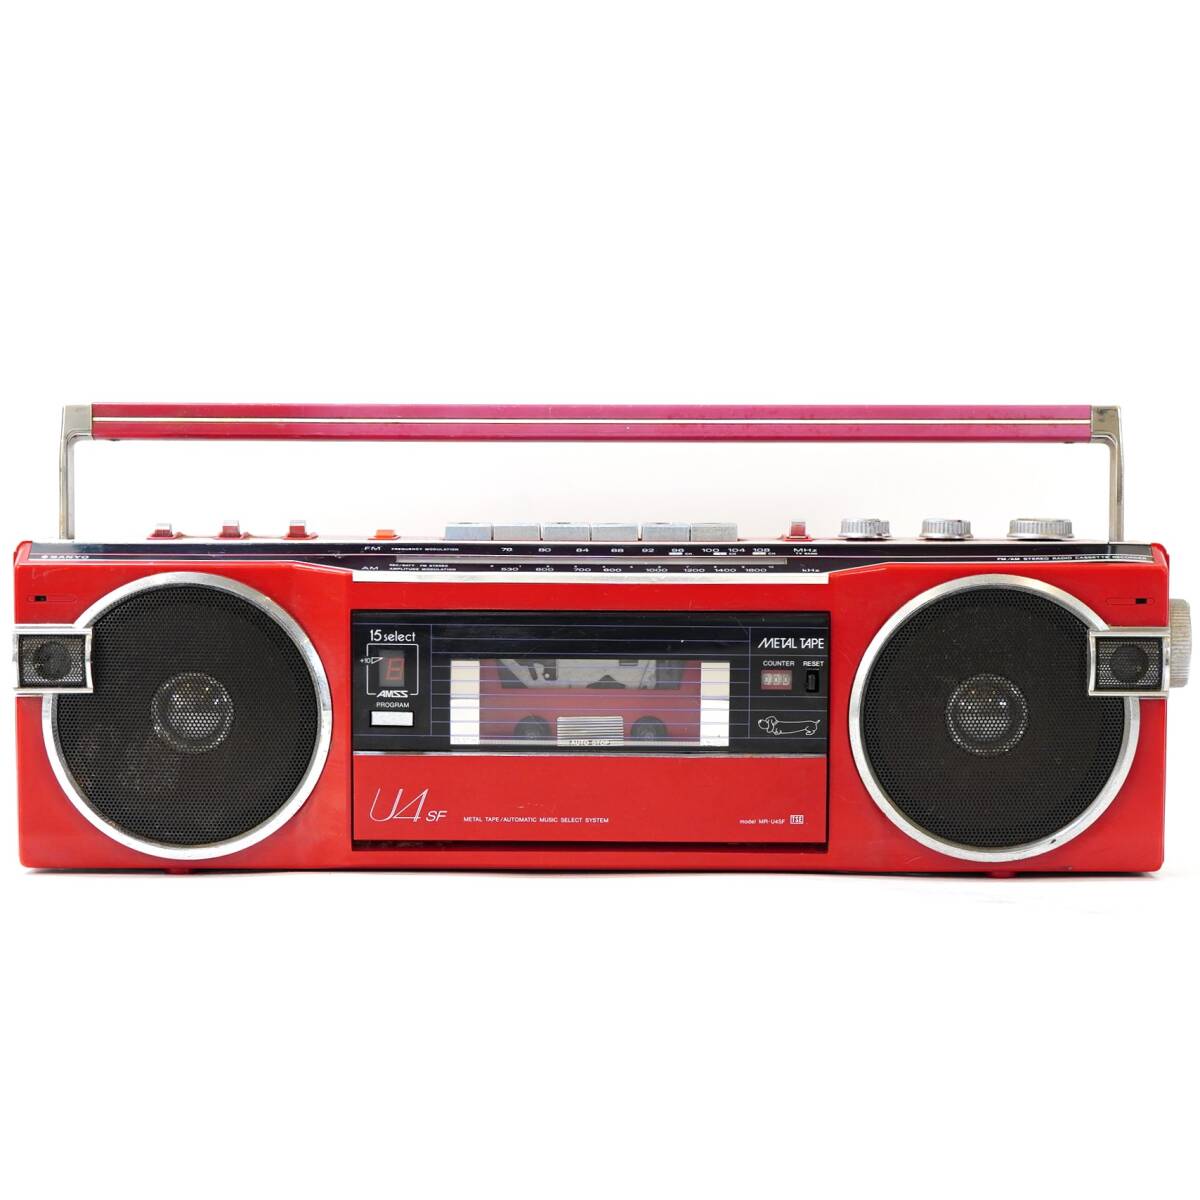 NA4852 ラジオ受信〇 テープ再生× 簡易クリーニング済 SANYO サンヨー 小型ラジカセ 赤 レッド MR-U4SF 昭和レトロ レトロ 検S_画像2